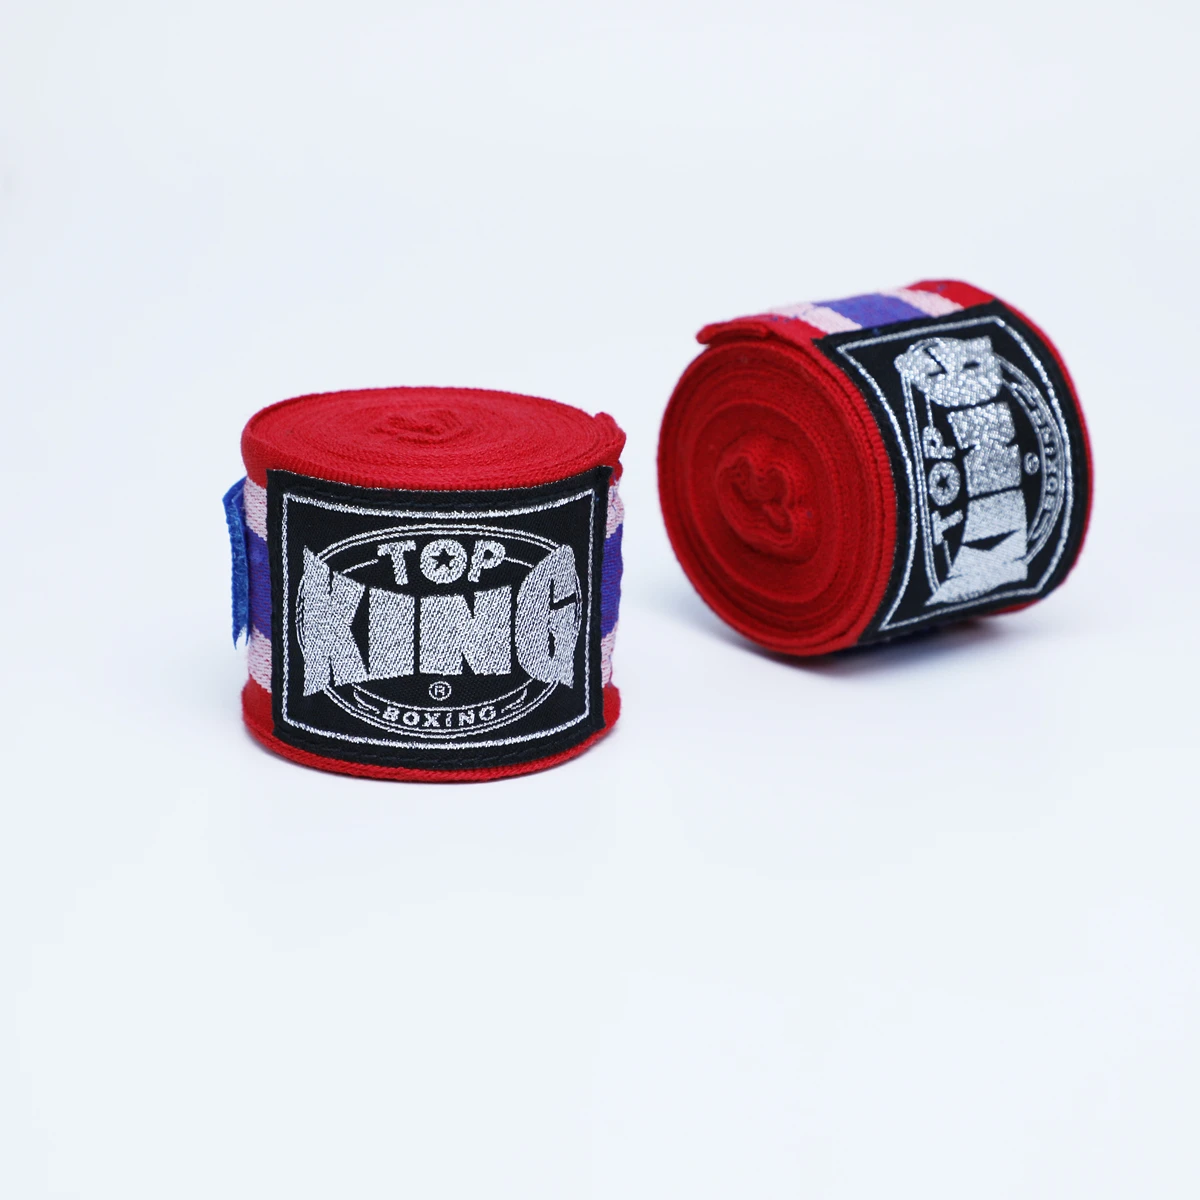 TOP KING боксерские полурастягивающиеся боксерские перчатки 5 м MMA COMBAT - Цвет: strips